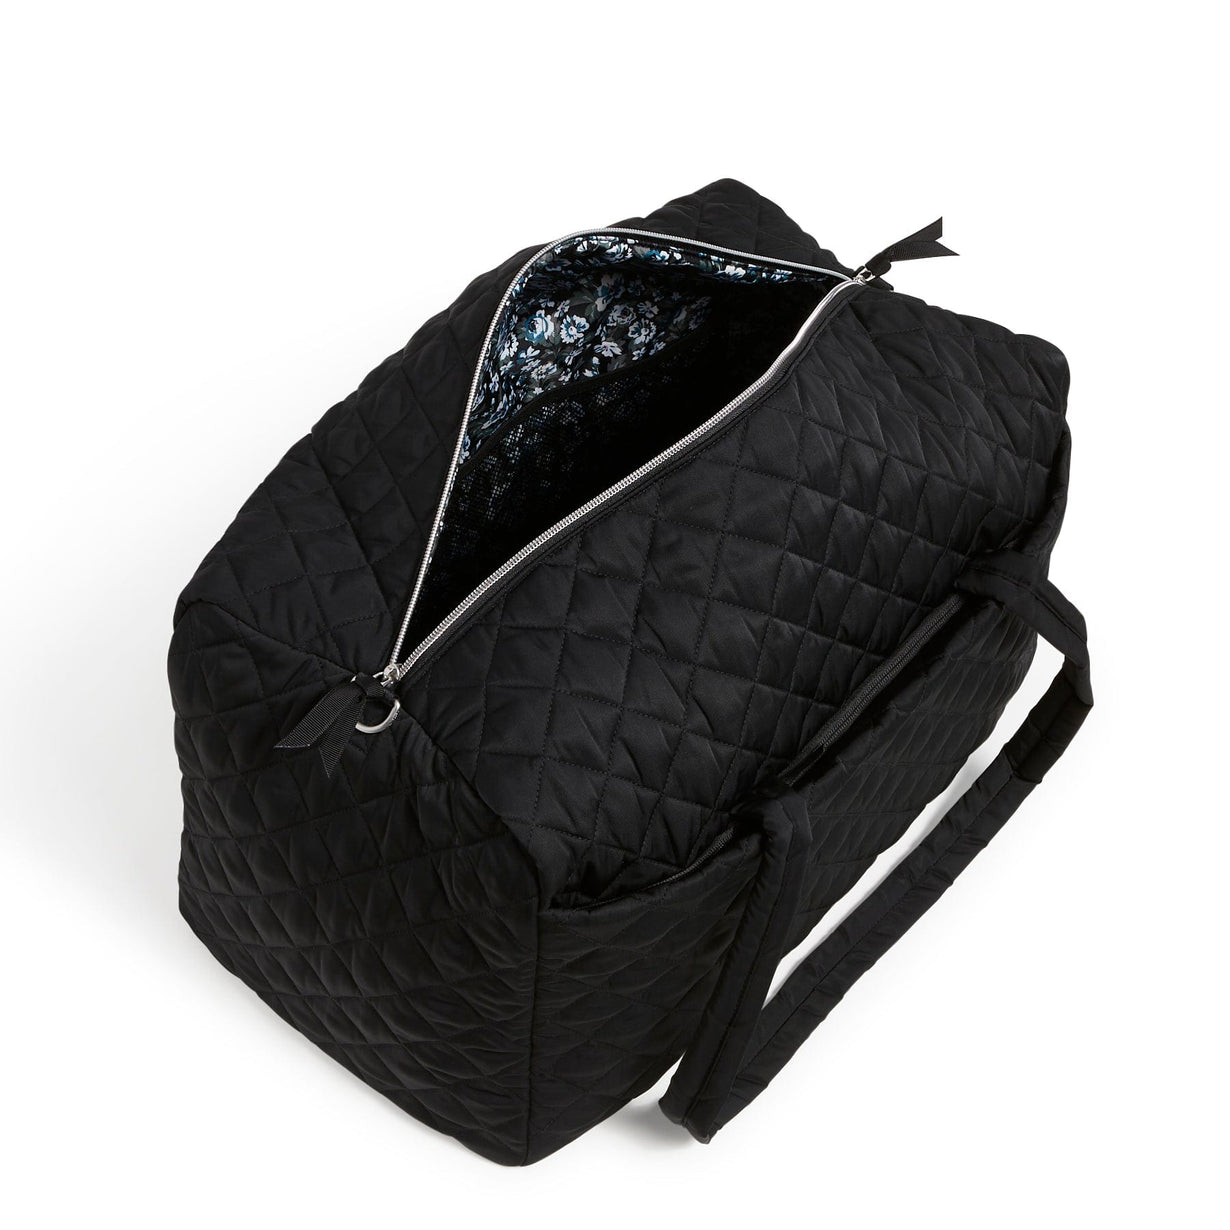 Large Travel Duffel Bag - Performance Twill Black | Vera Bradley